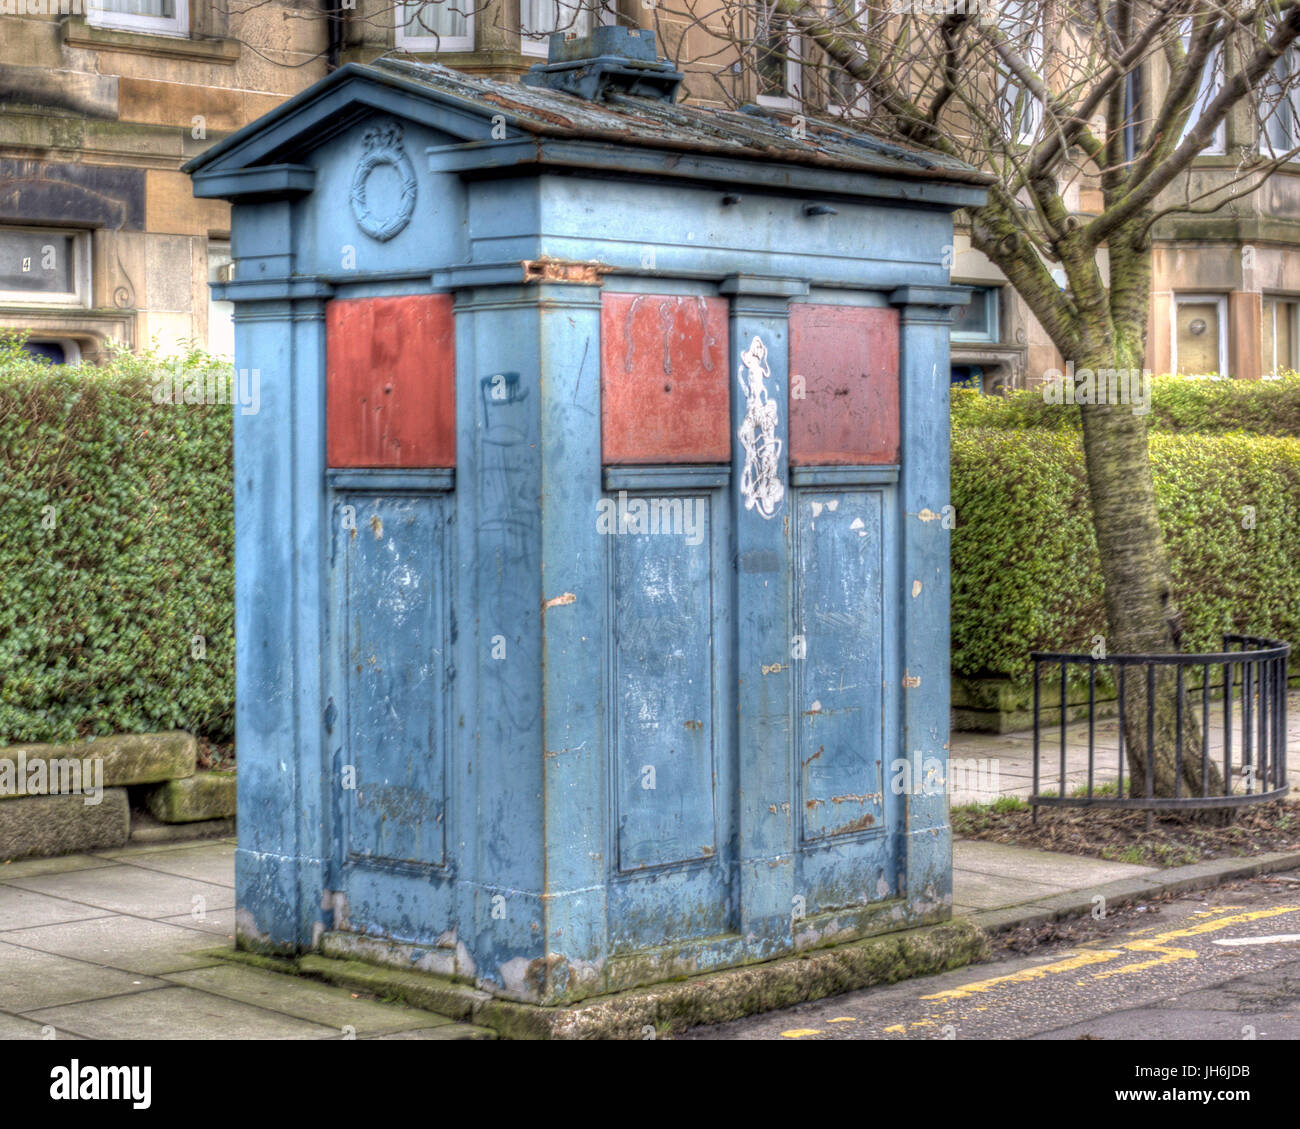 Edinburgh police box telephone Tardis not converted in dilapidated state Stock Photo